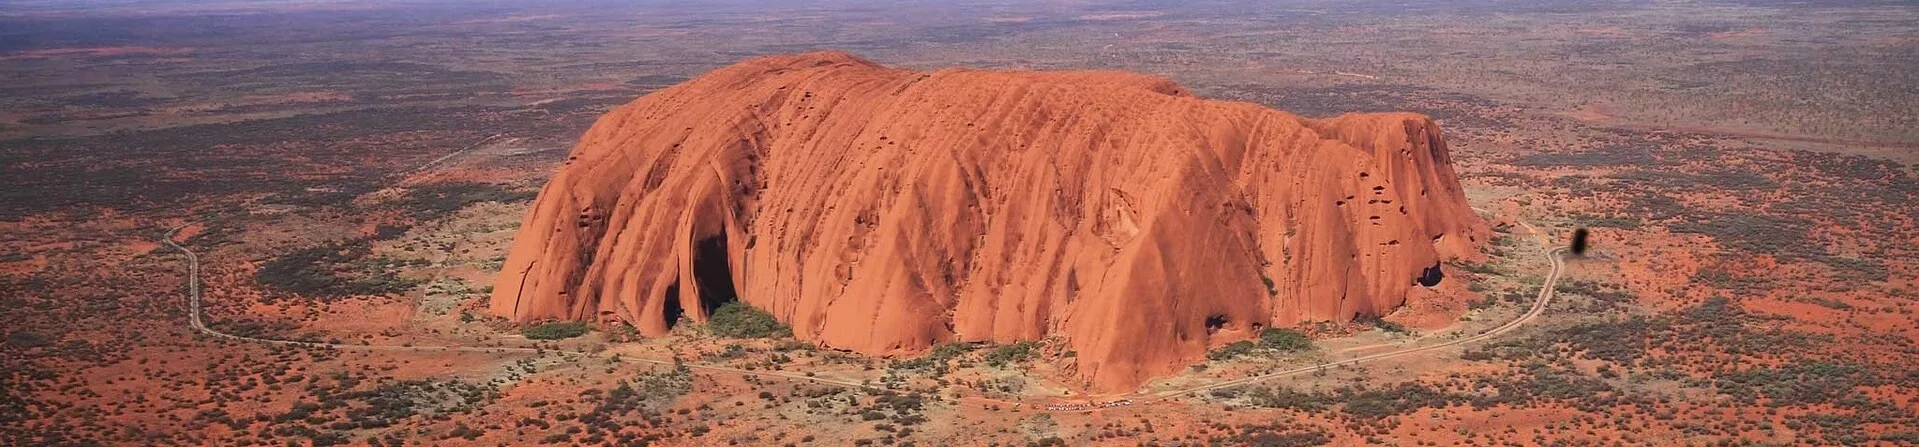 Is Uluru the biggest rock in the world?